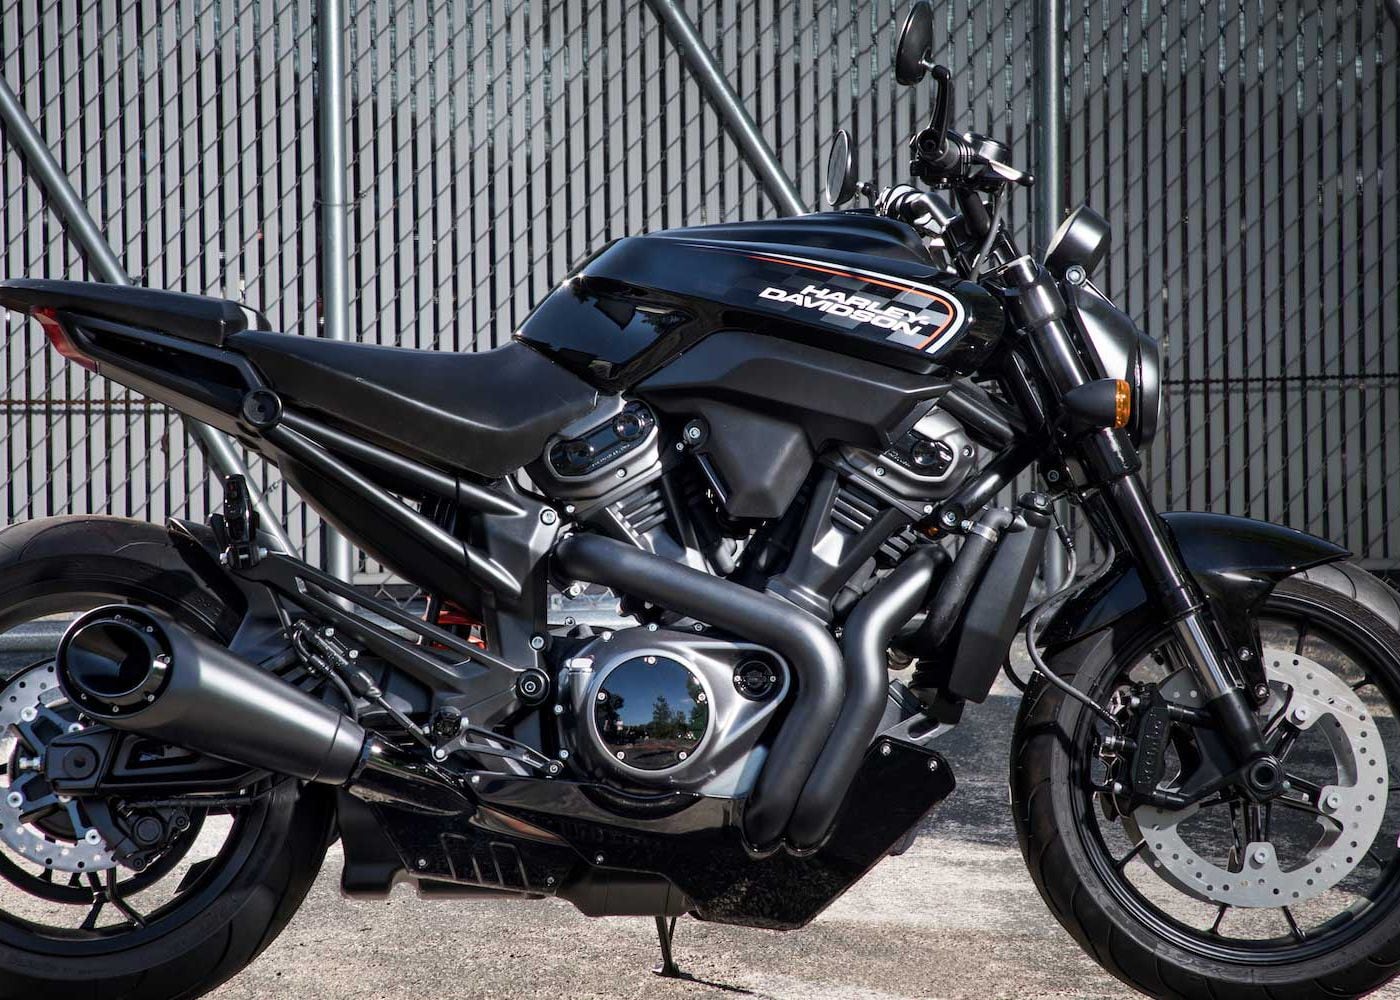 Harley Davidson Crotch Rocket: Rev Up Your Ride!